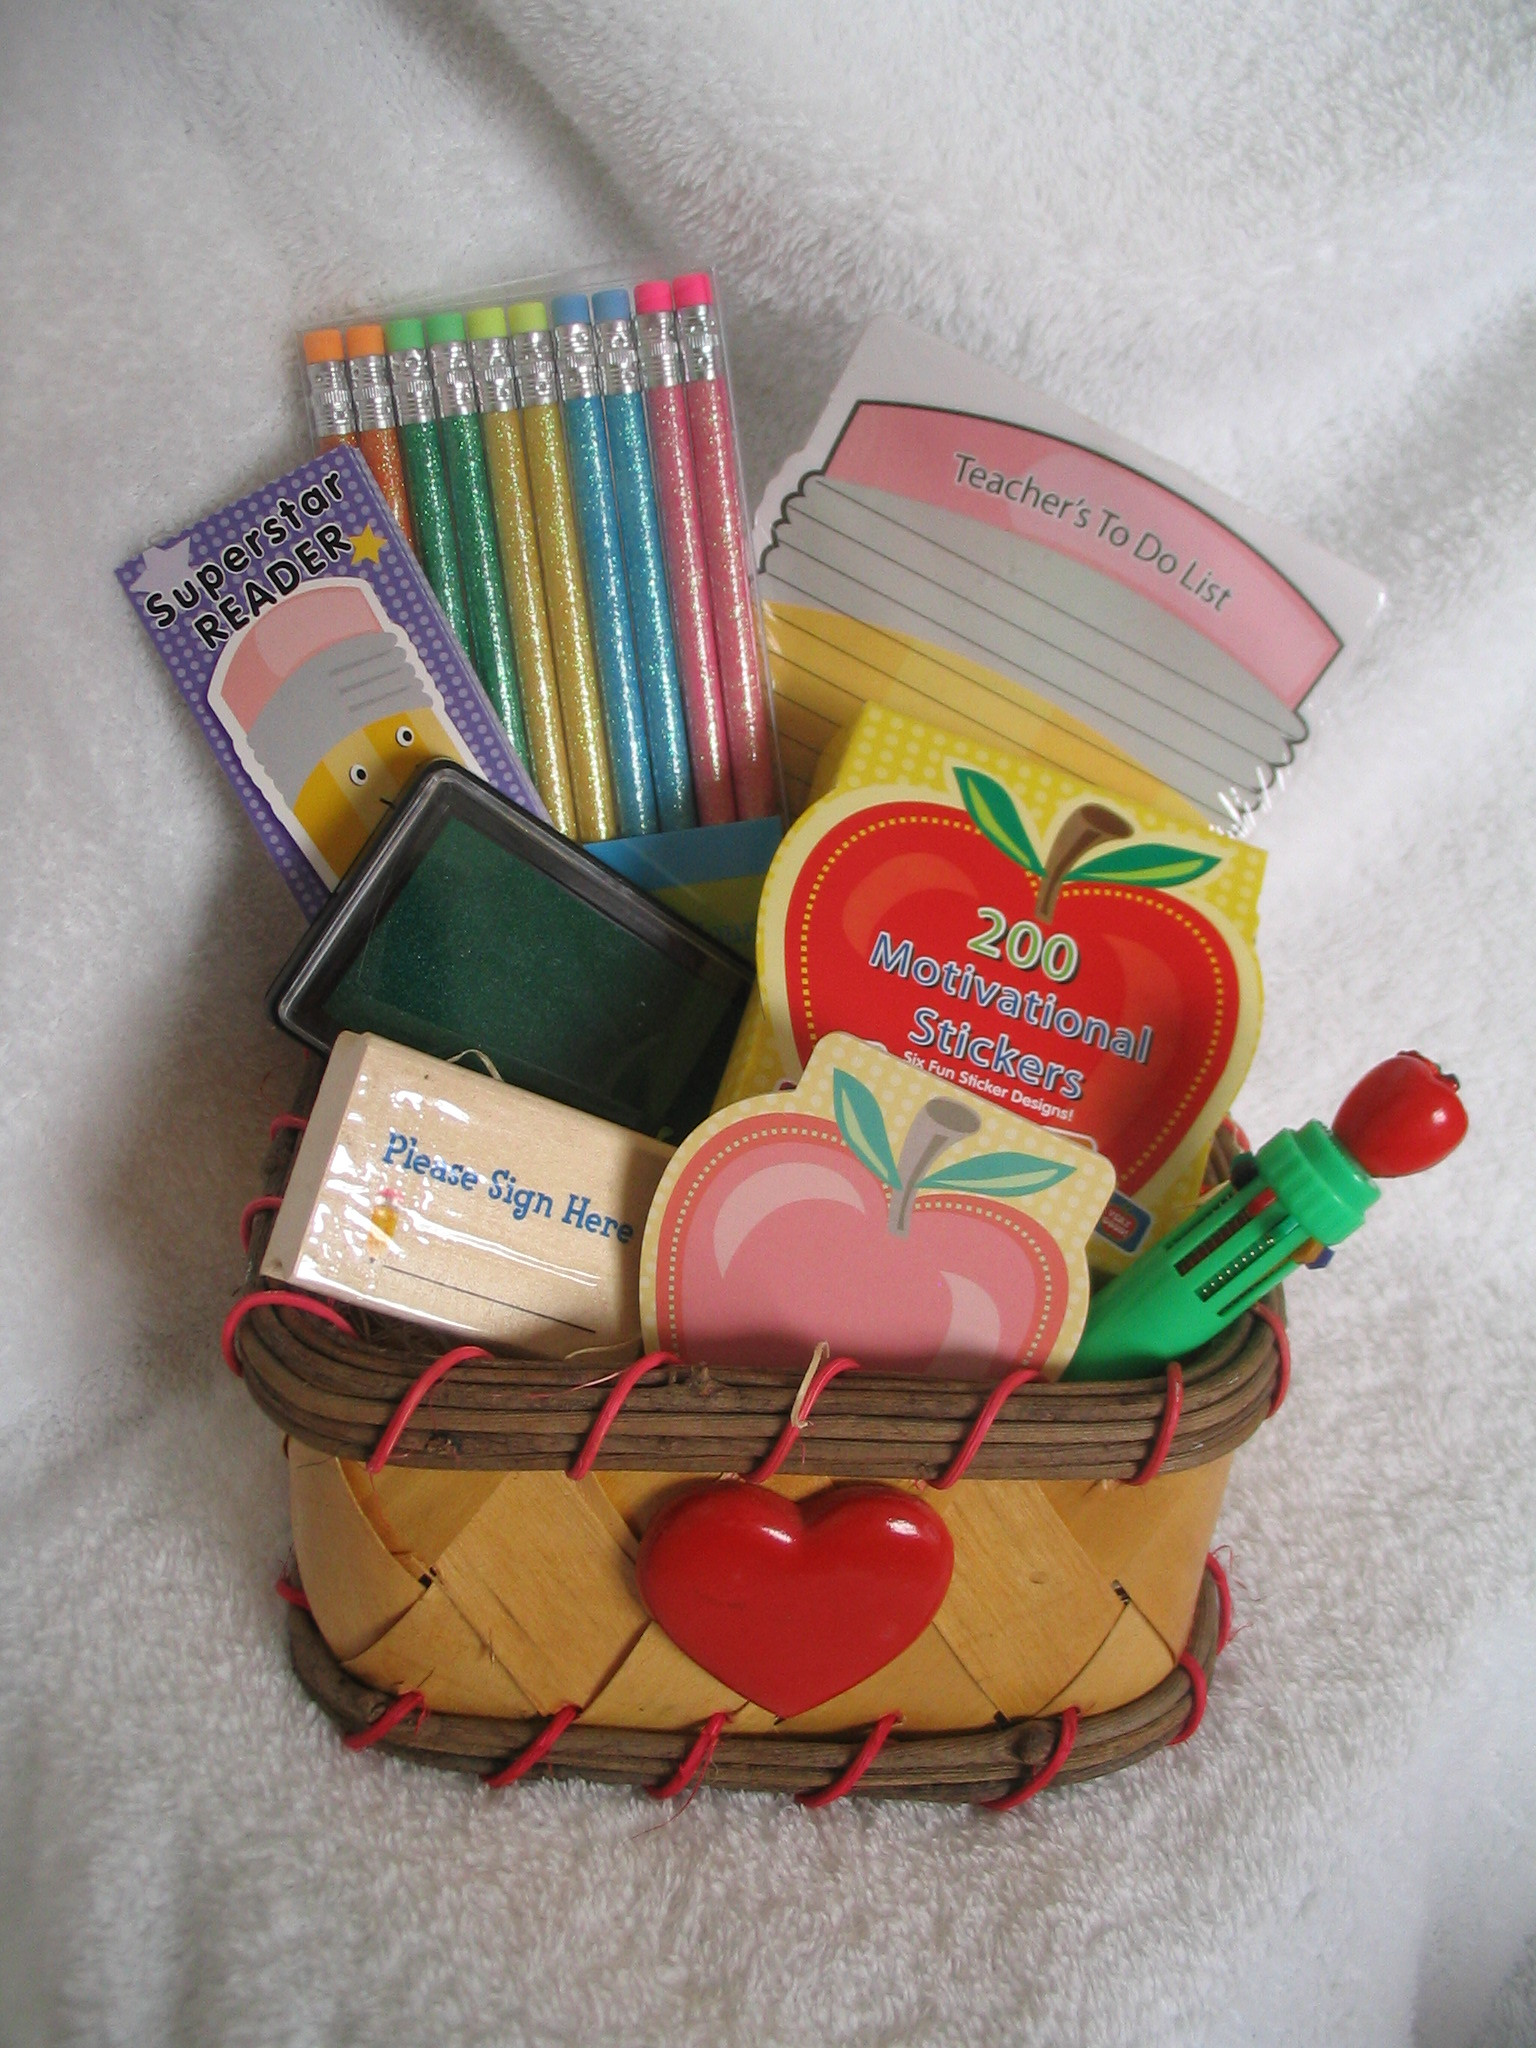 New Teacher Gift Basket Ideas
 The Basket Case